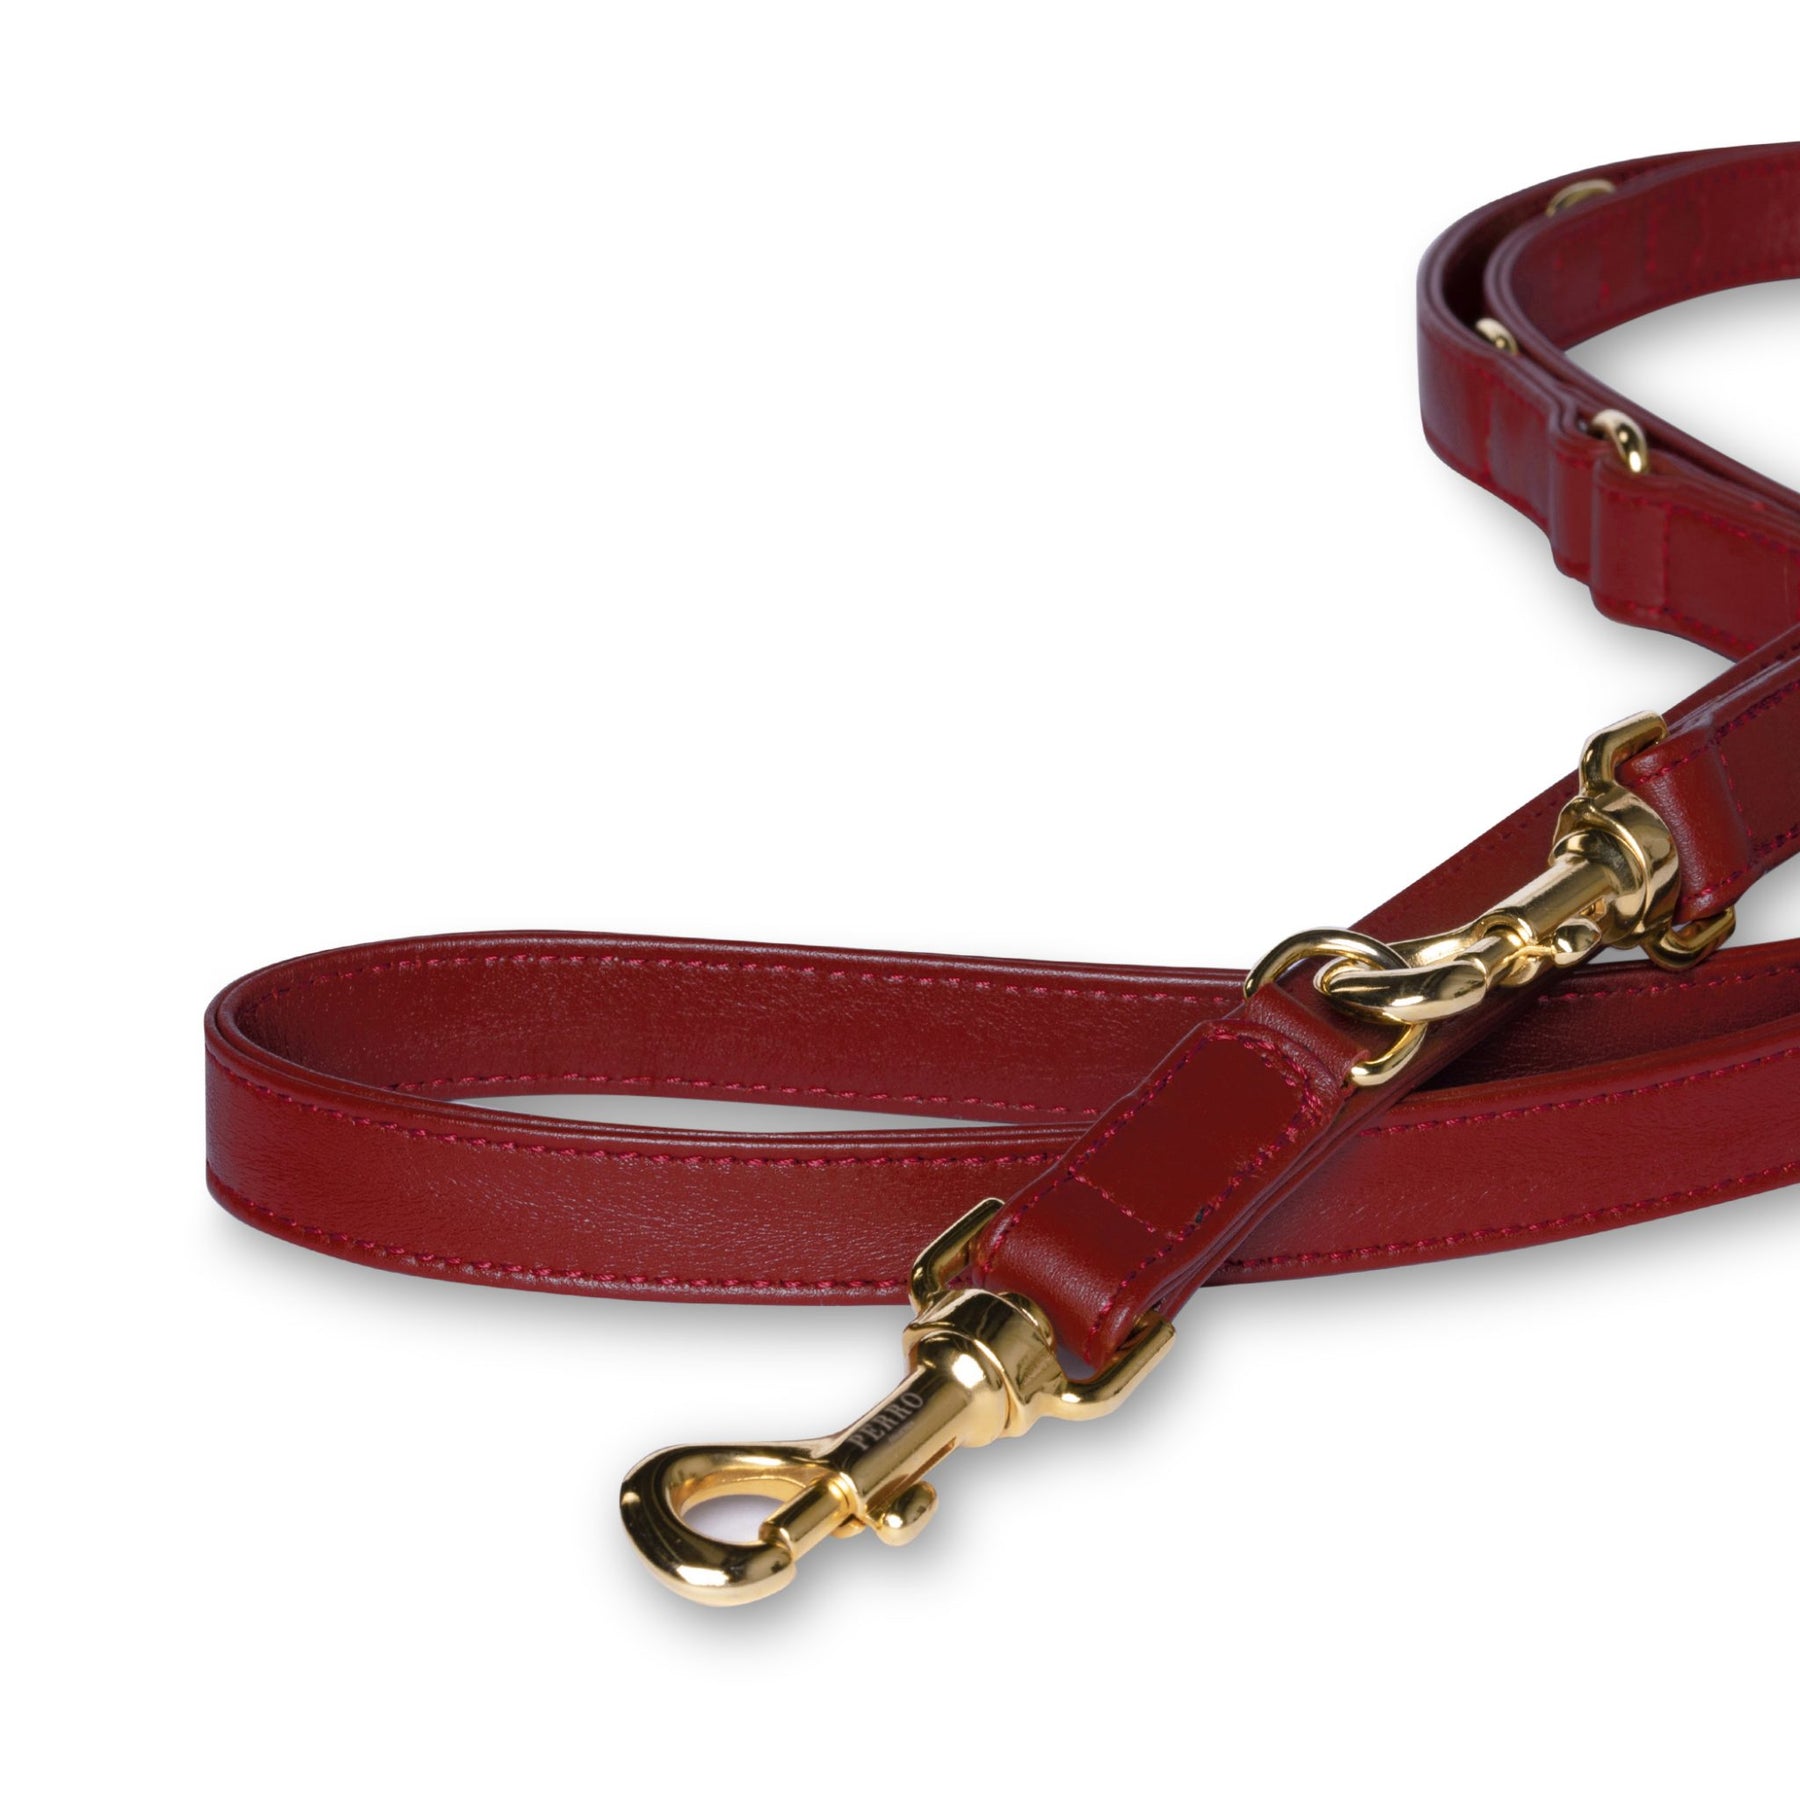 scarlet long leash close up